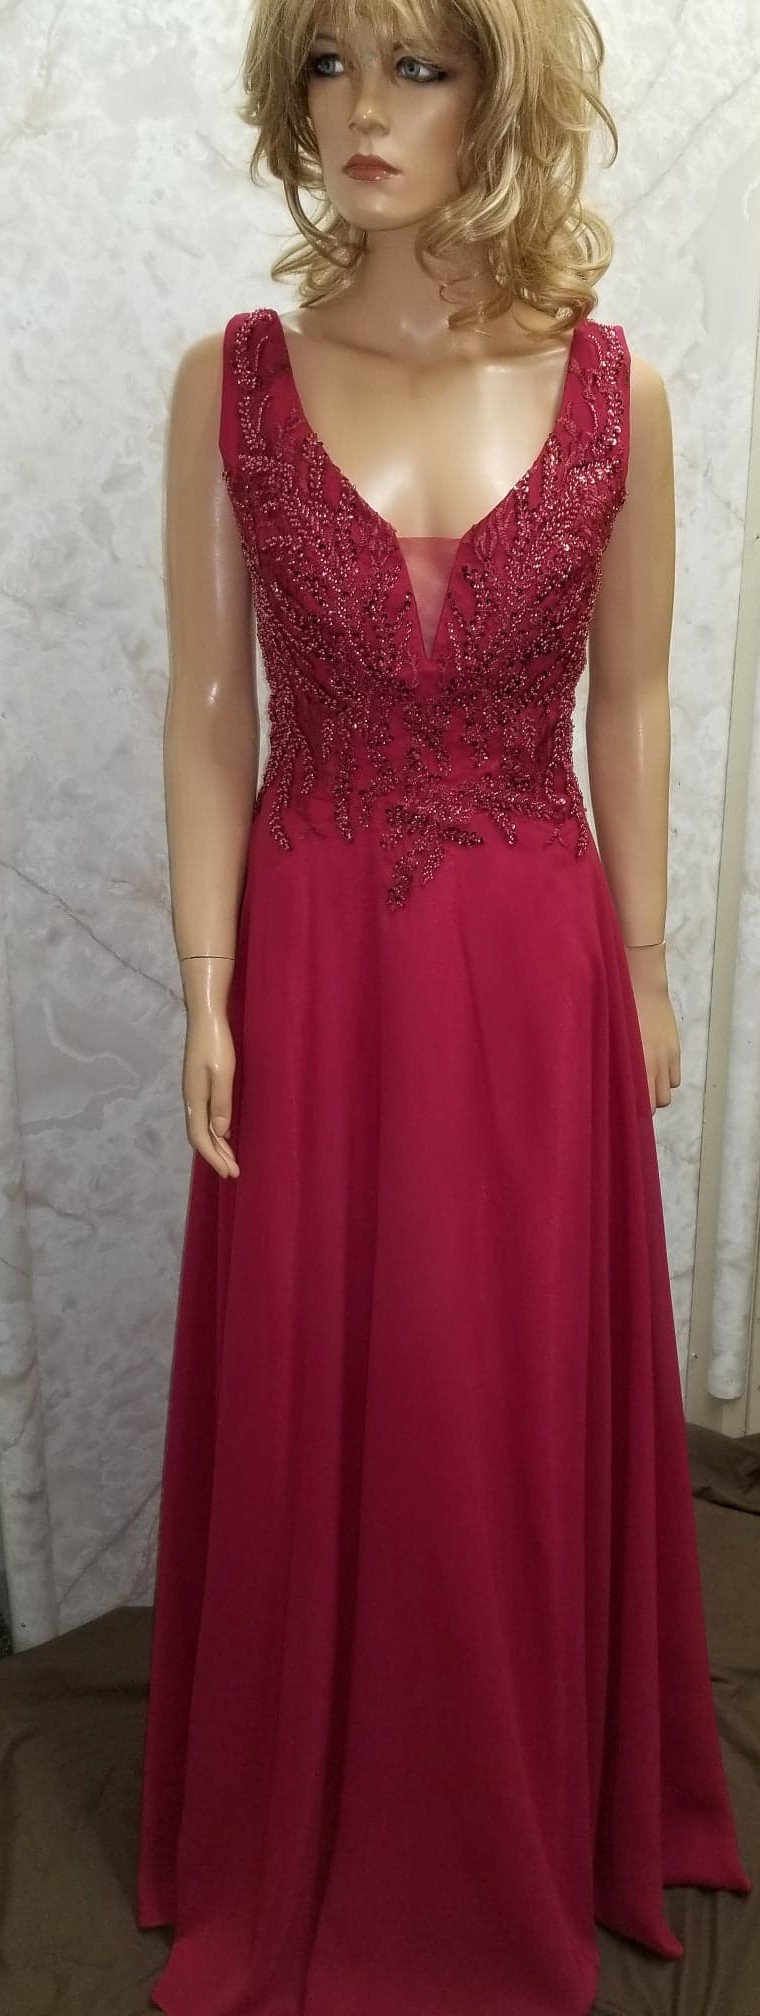 Red chiffon prom dress